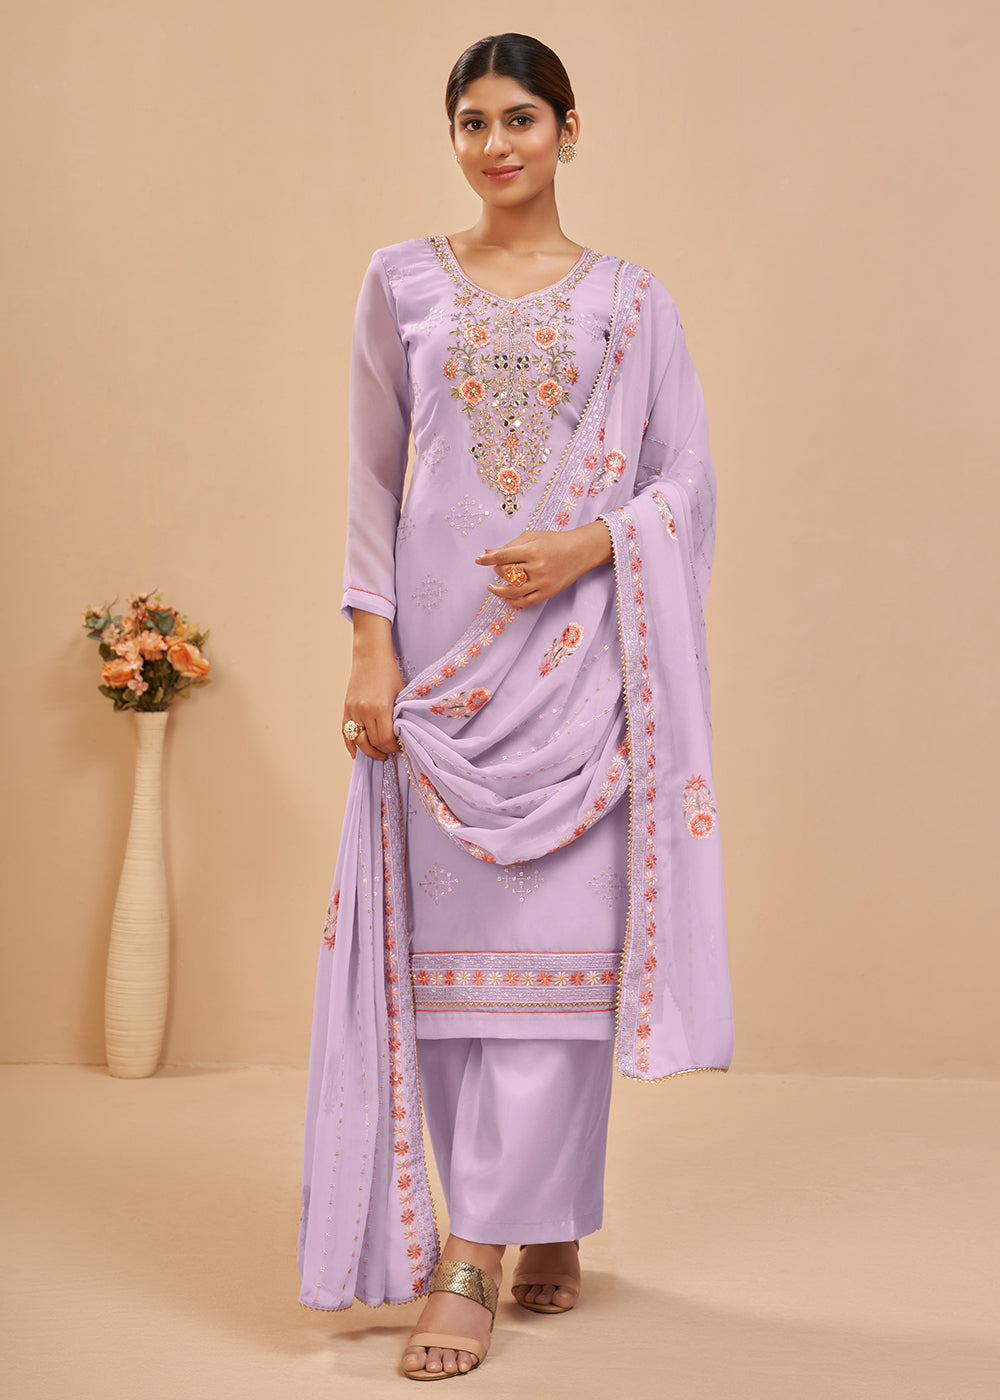 Buy Lavender Beautifully Embroidered Suit - Elegant Salwar Kameez